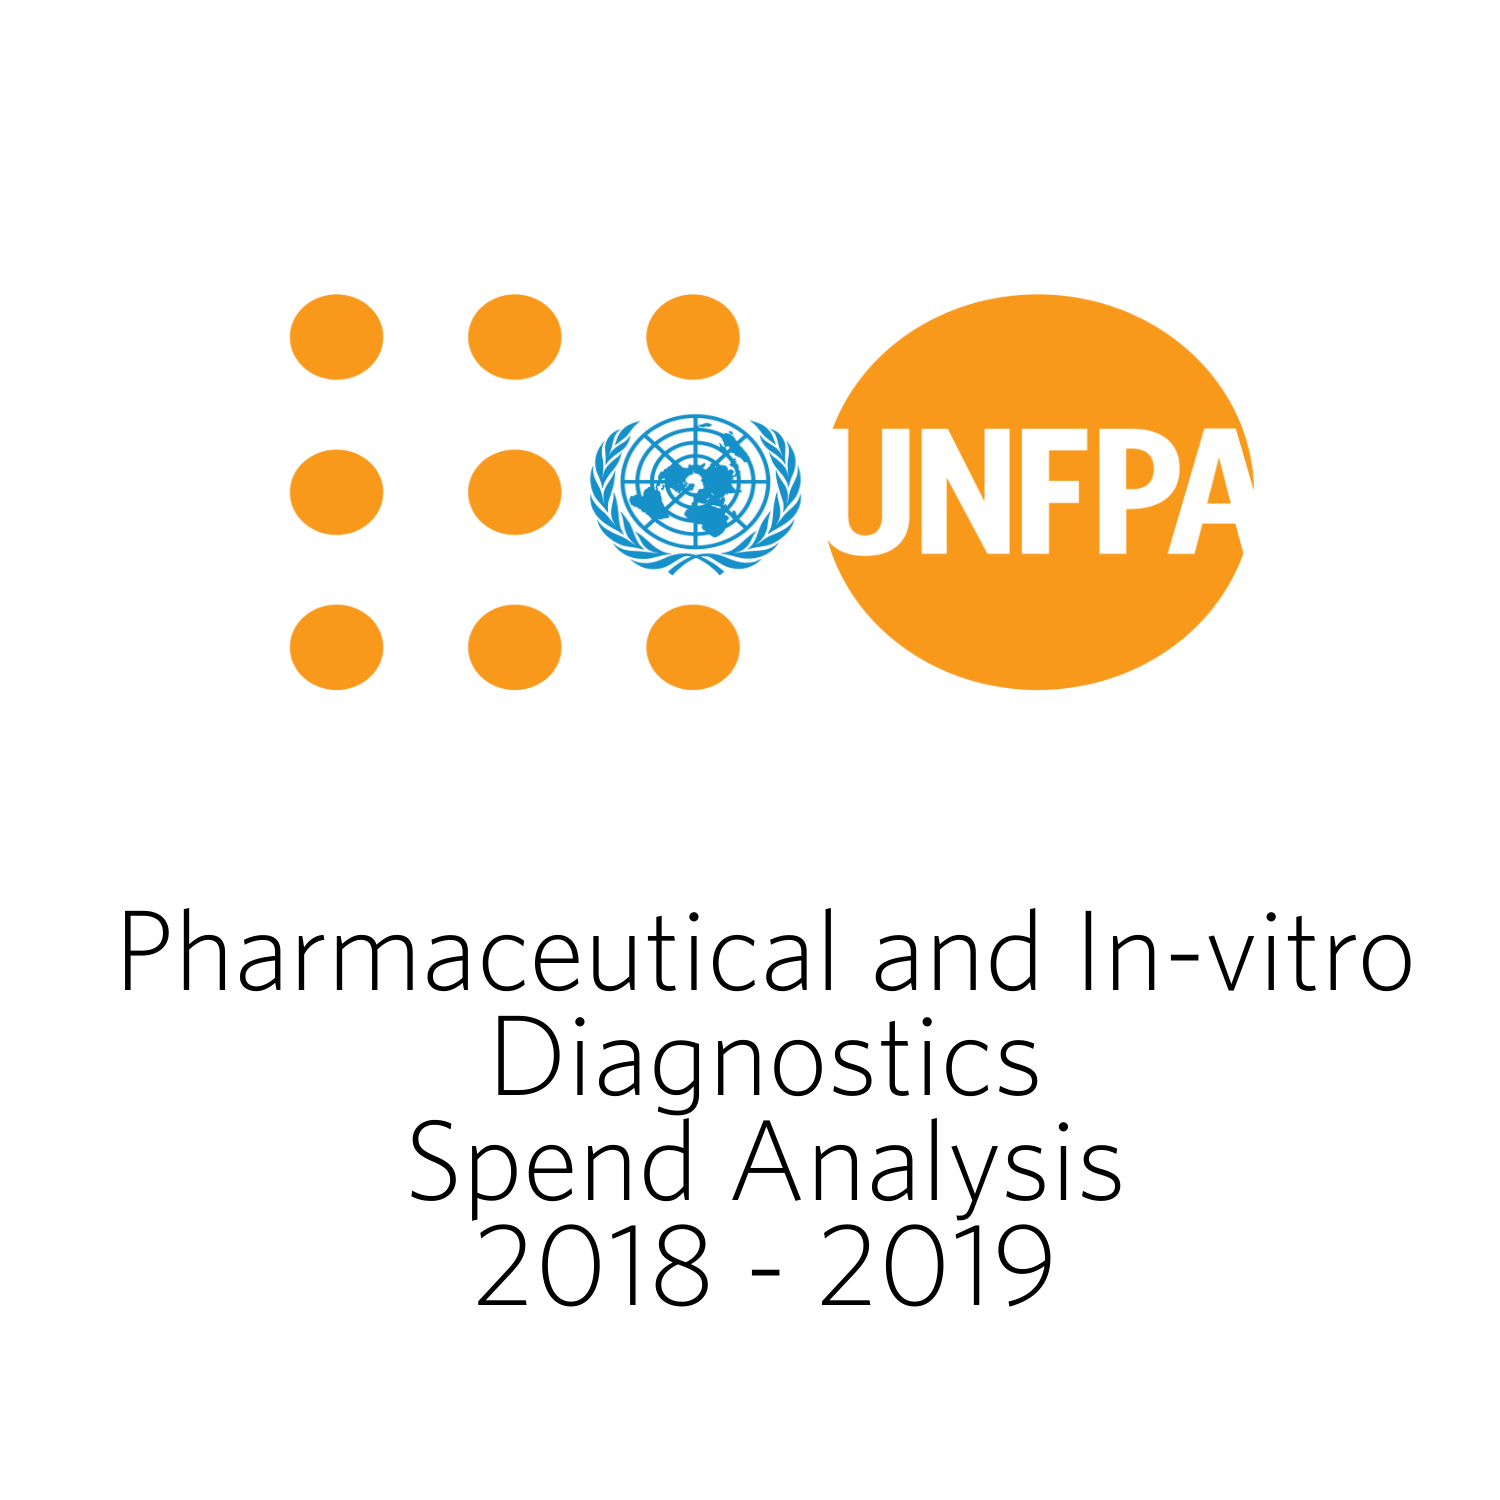 Pharmaceutical and In-vitro Diagnostics Spend Analysis 2018 - 2019